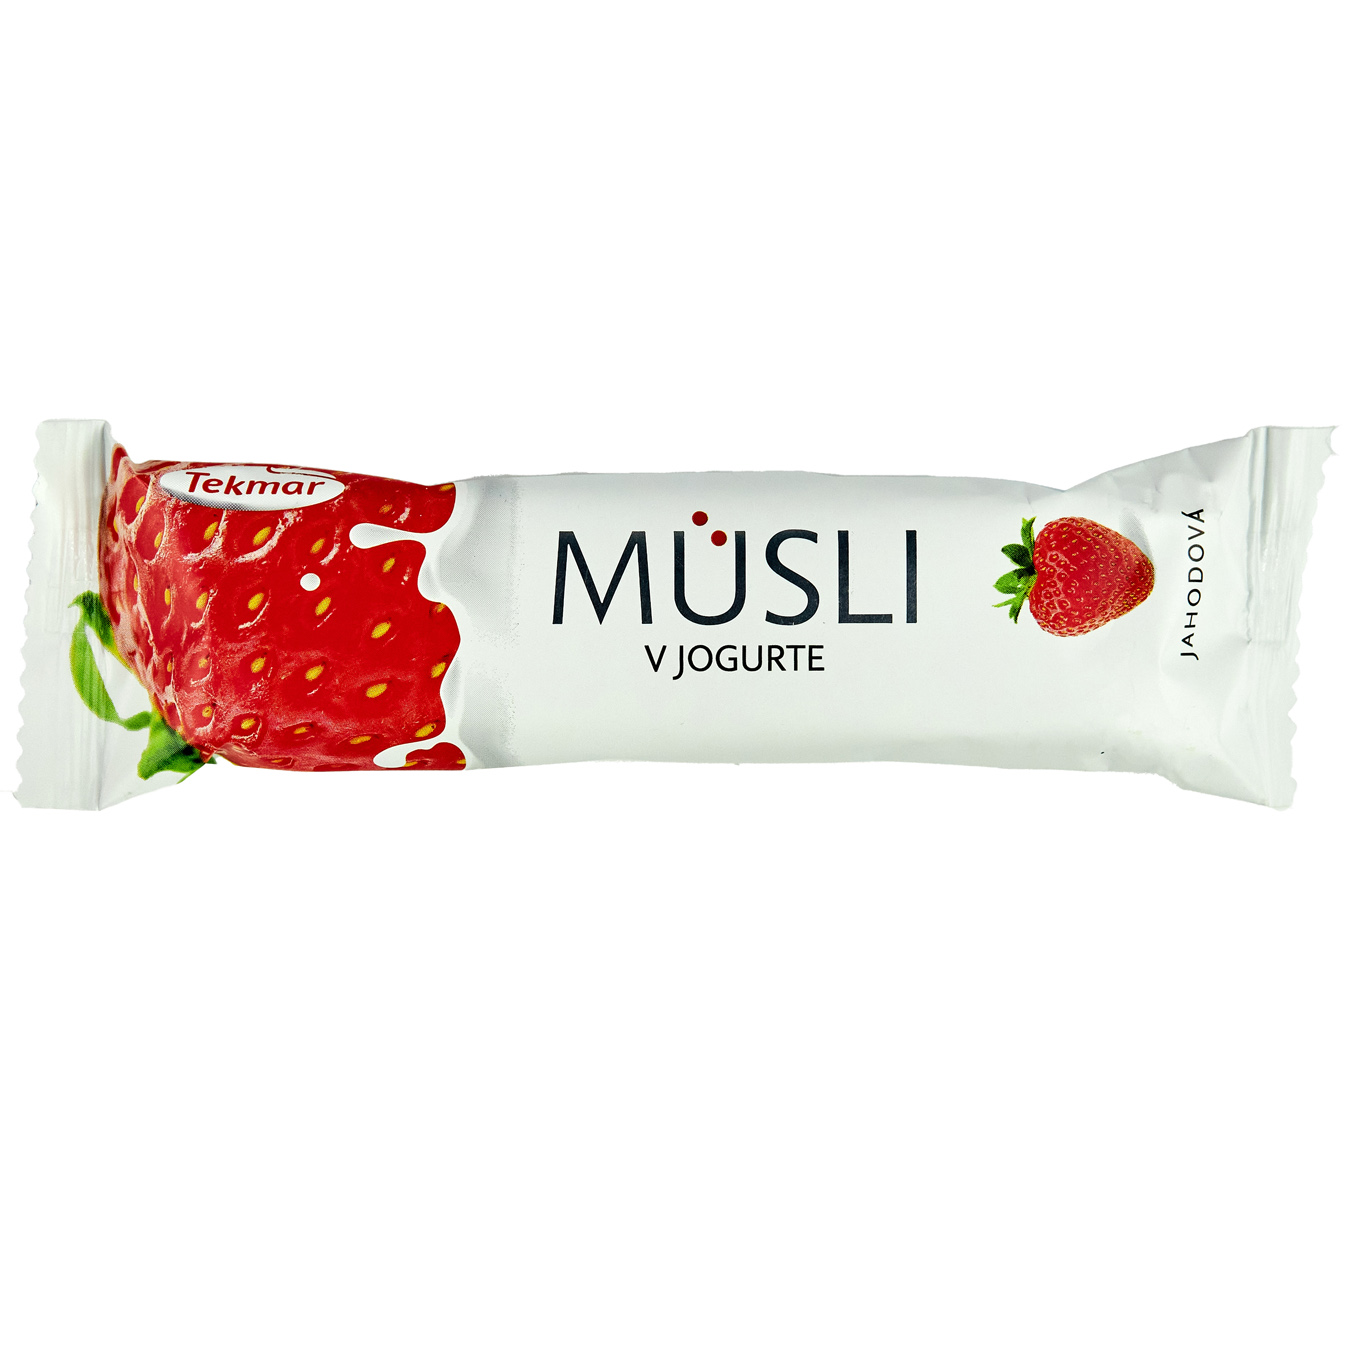 Tekmar muesli bar in strawberry yogurt 30g